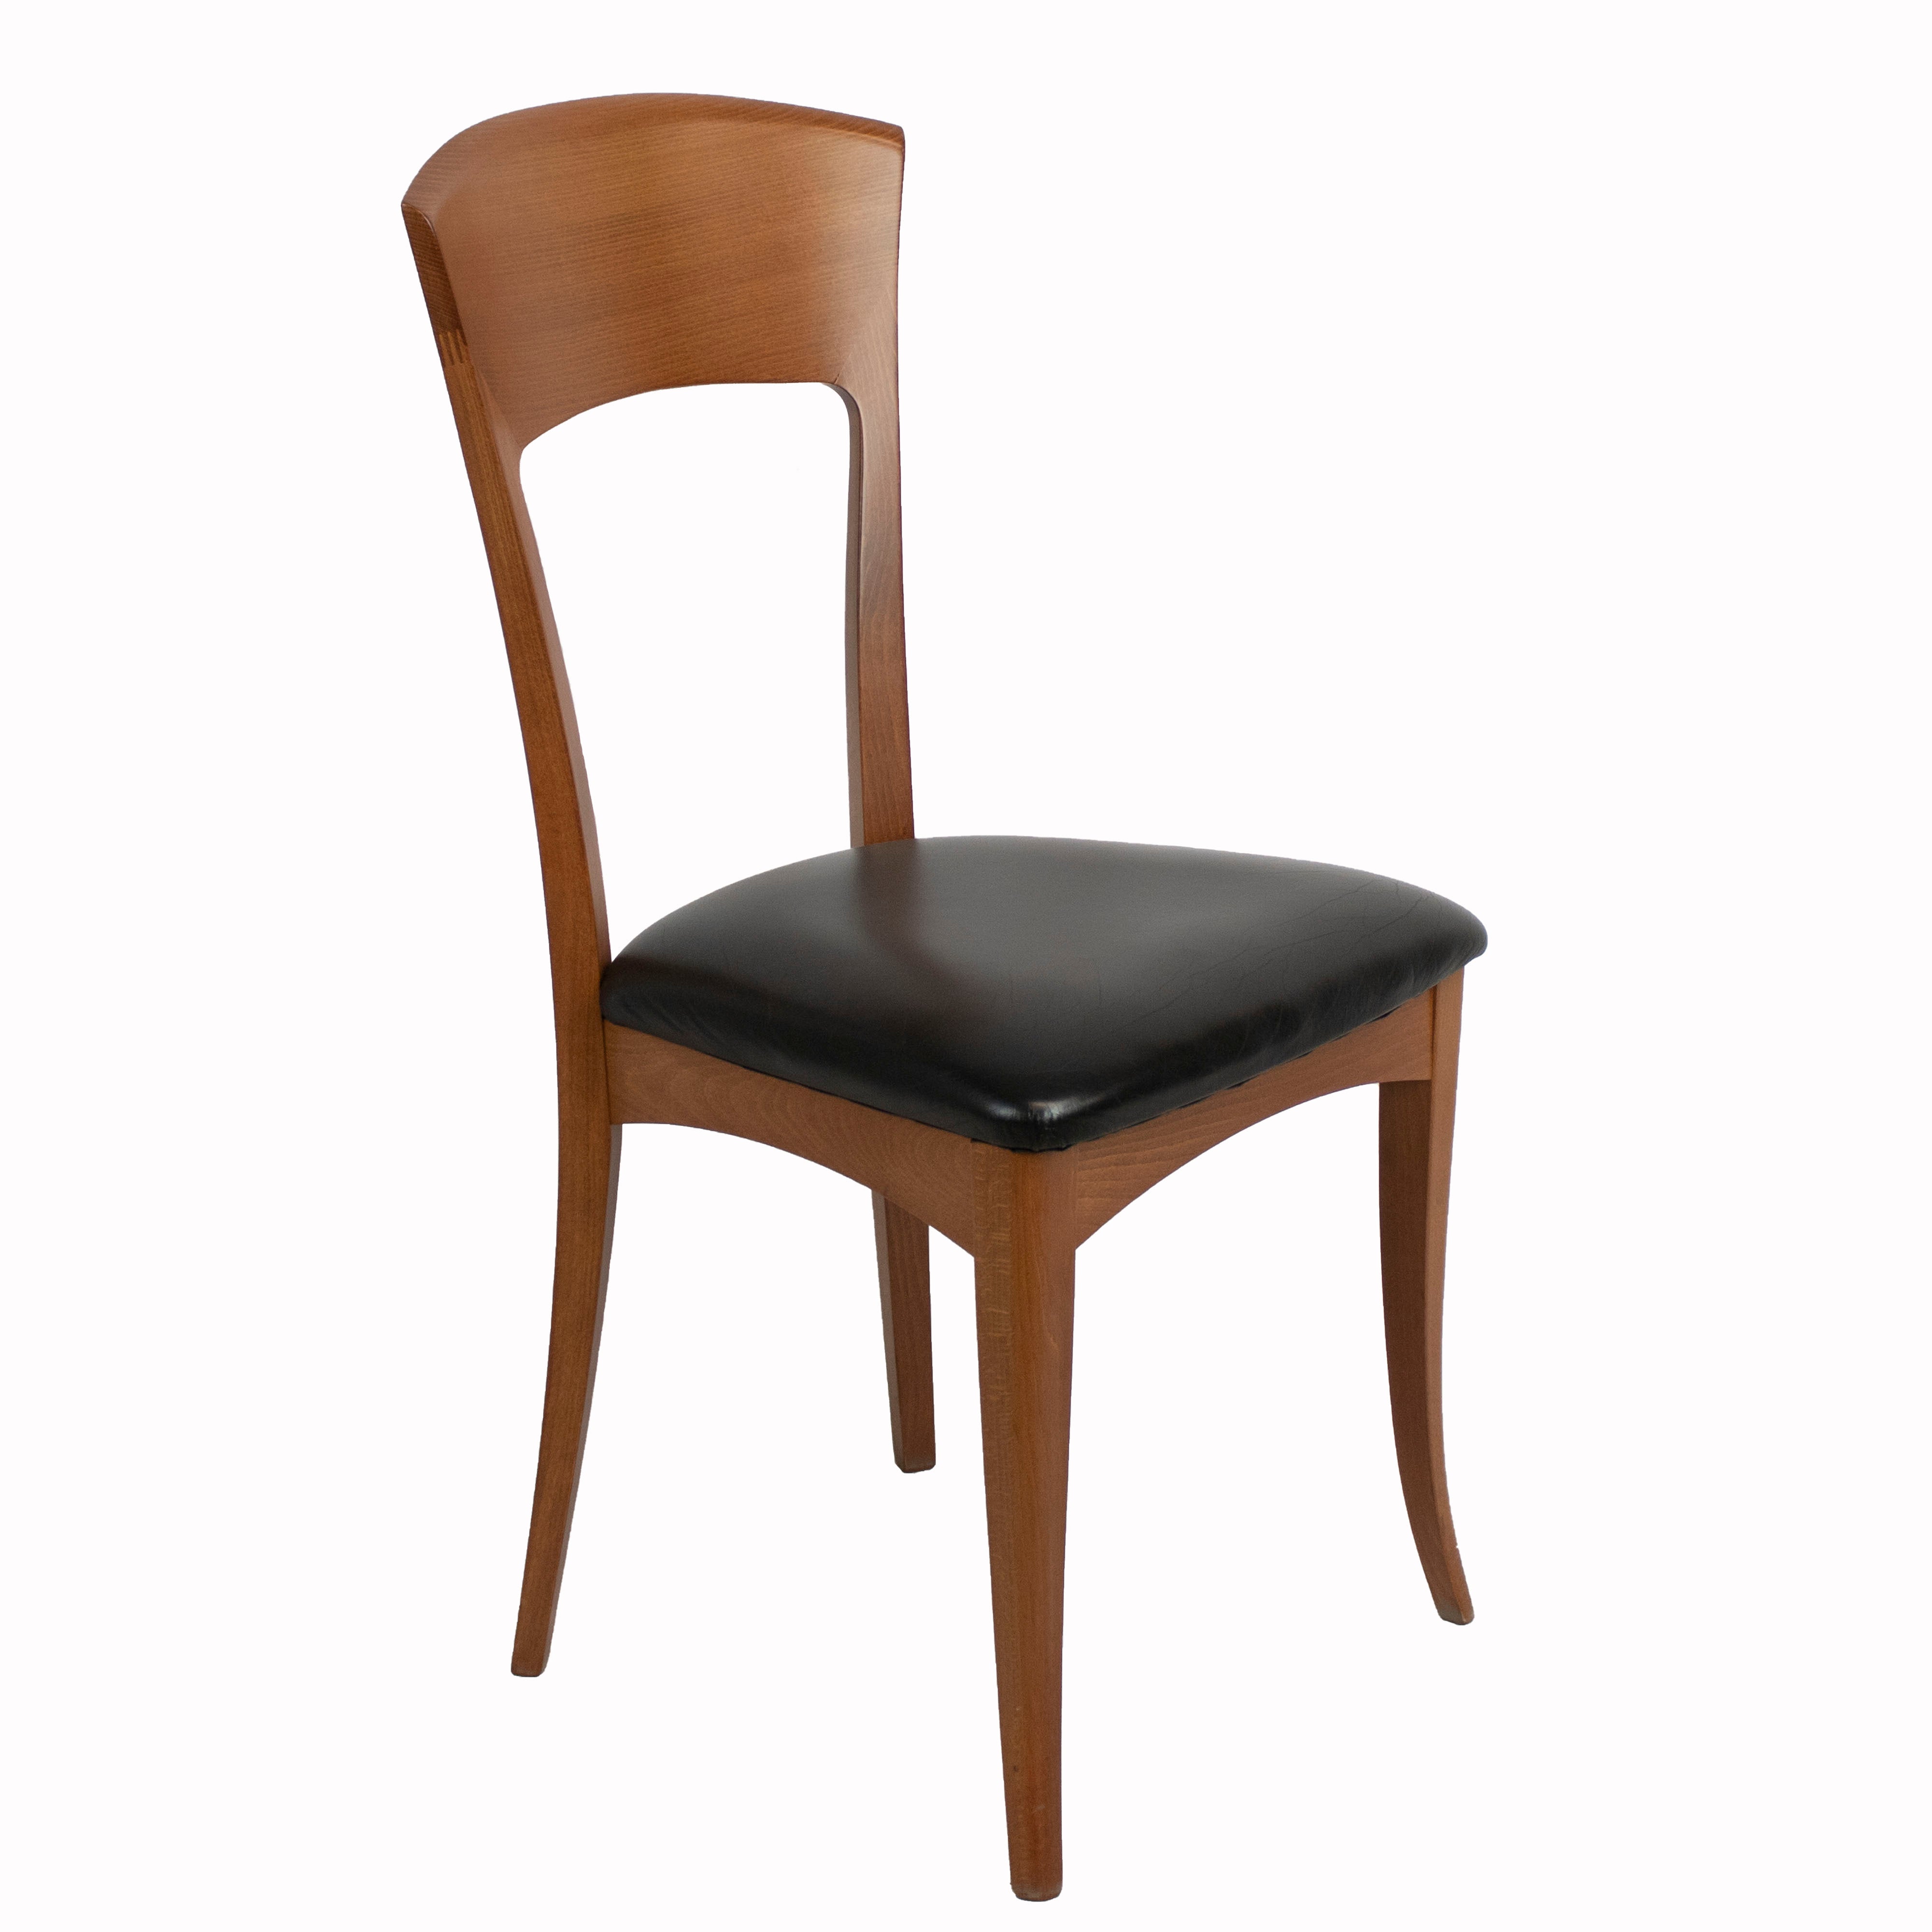 A. Sibau Italian Mid-Century Modern Chair - Arm Less - Preowned